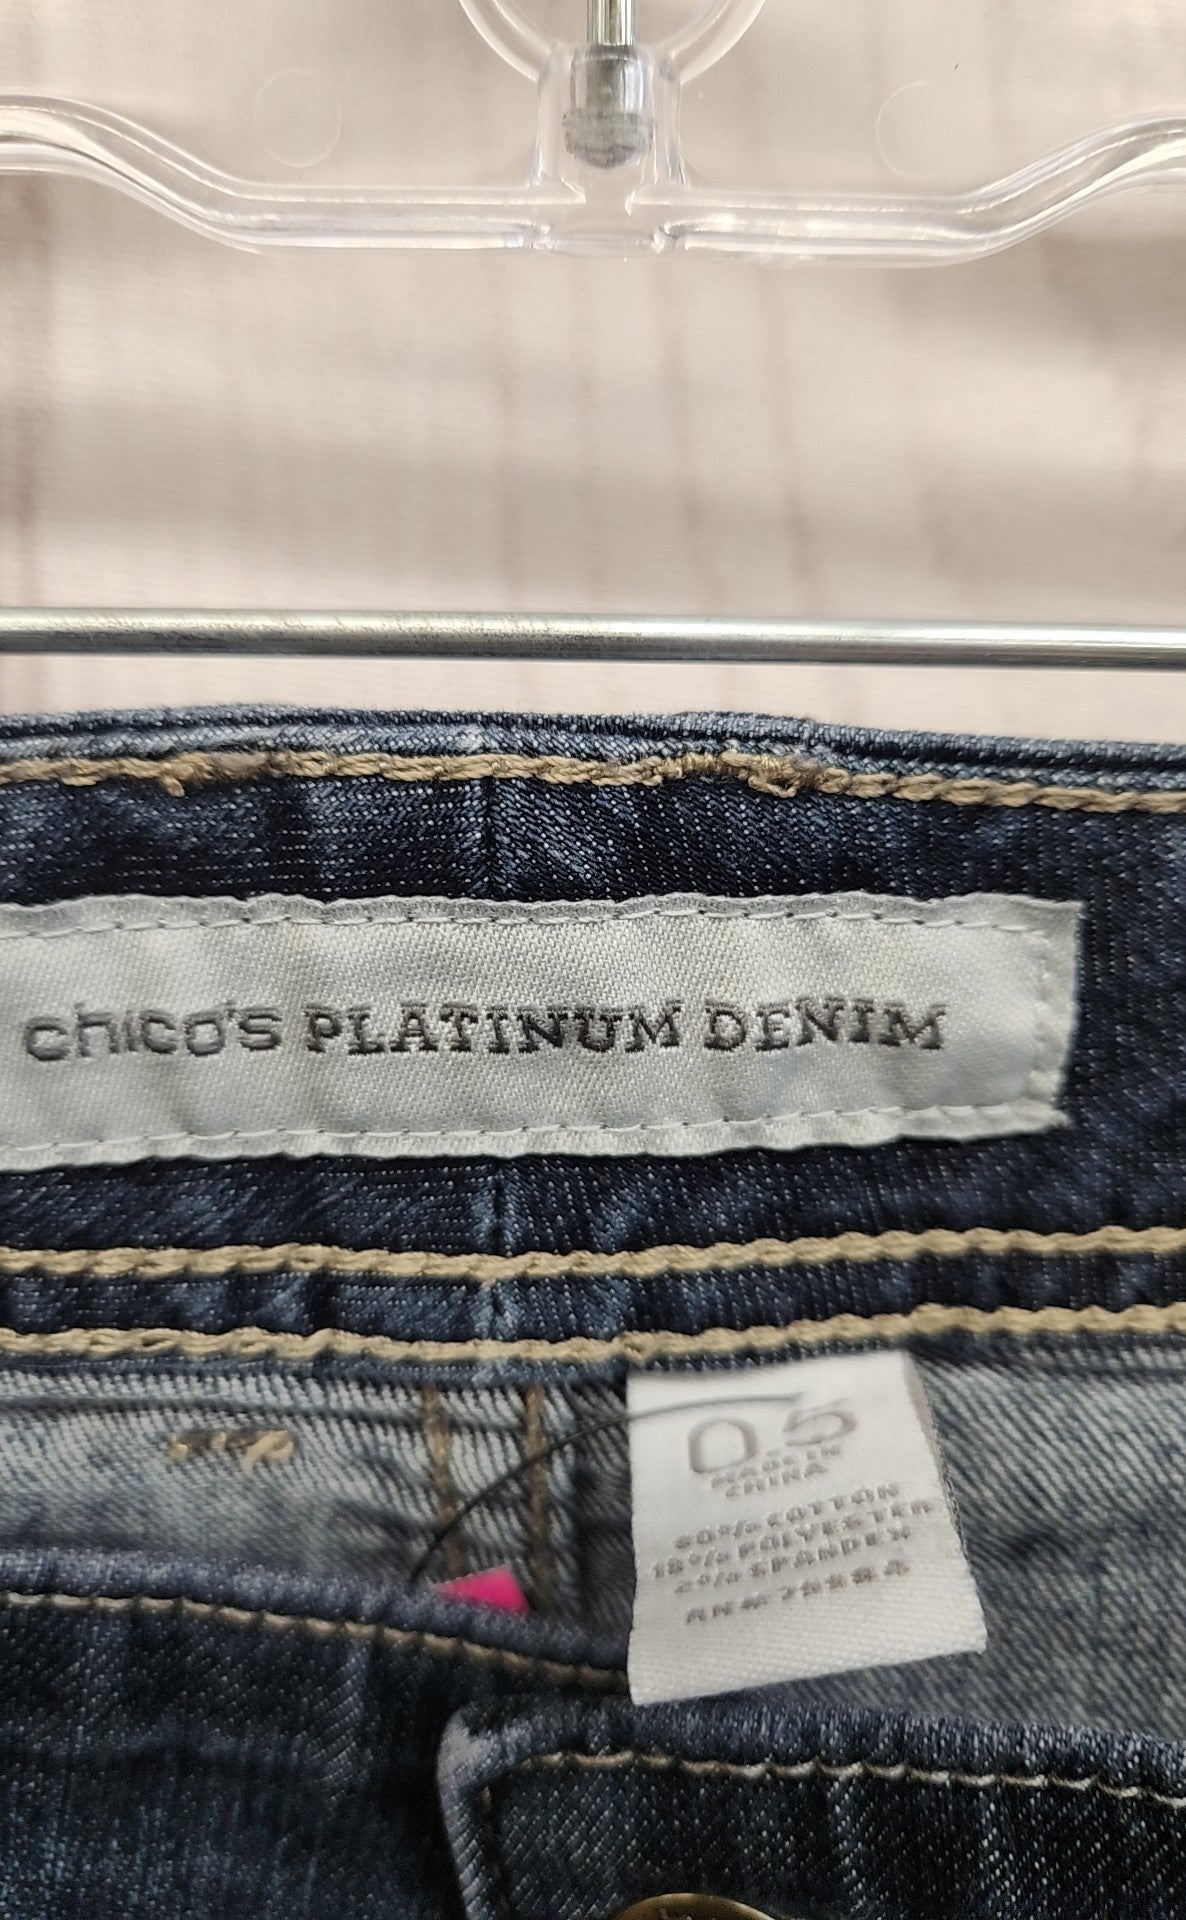 Chico's Women's Size 28 (5-6) Blue Jeans